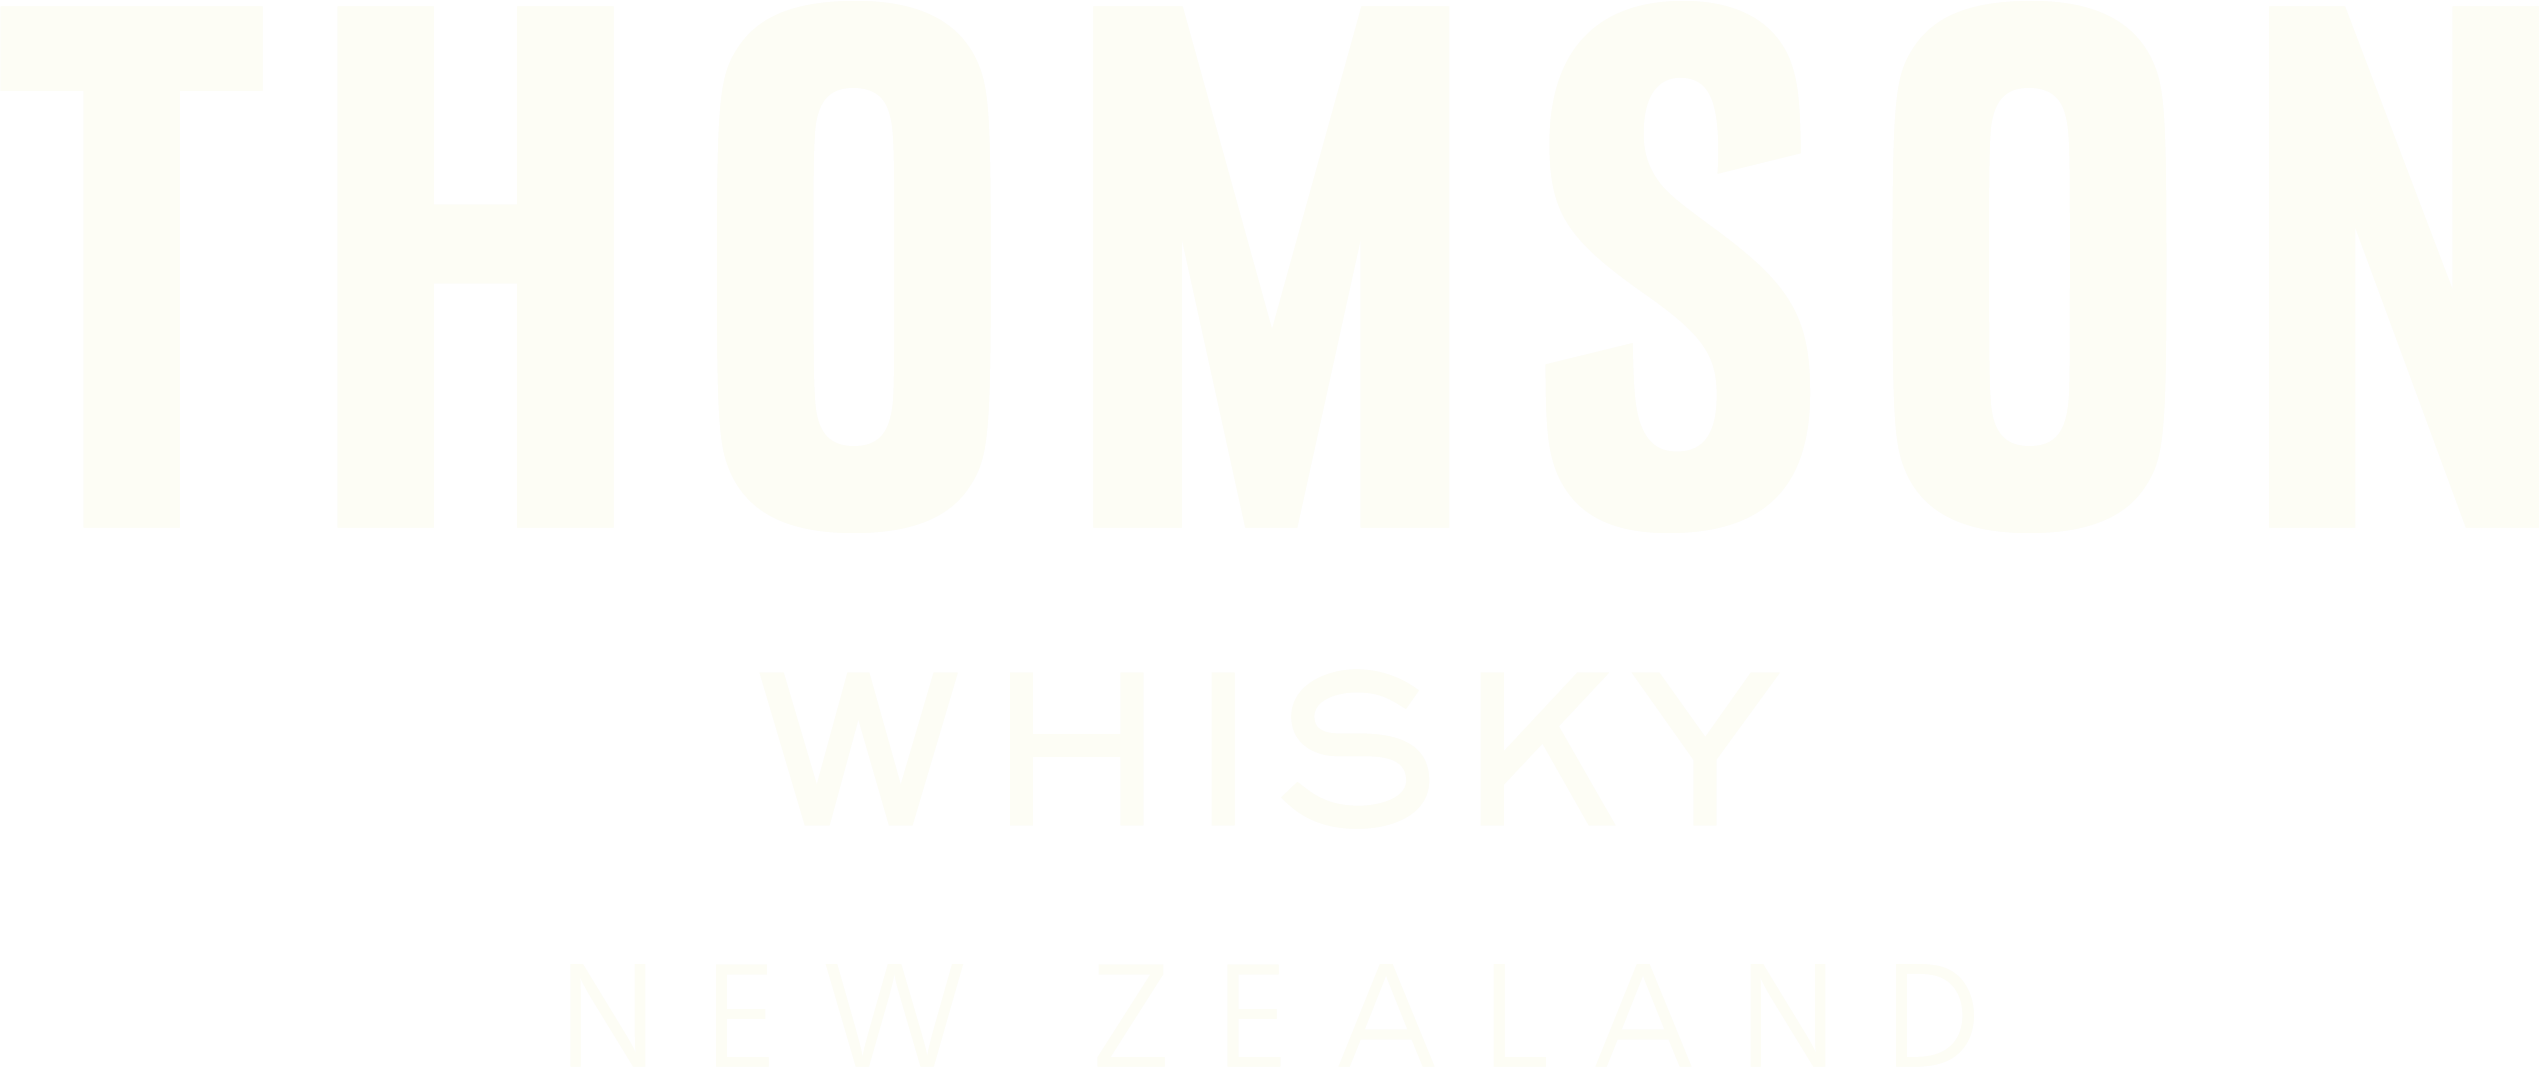 Thomson Whisky NZ